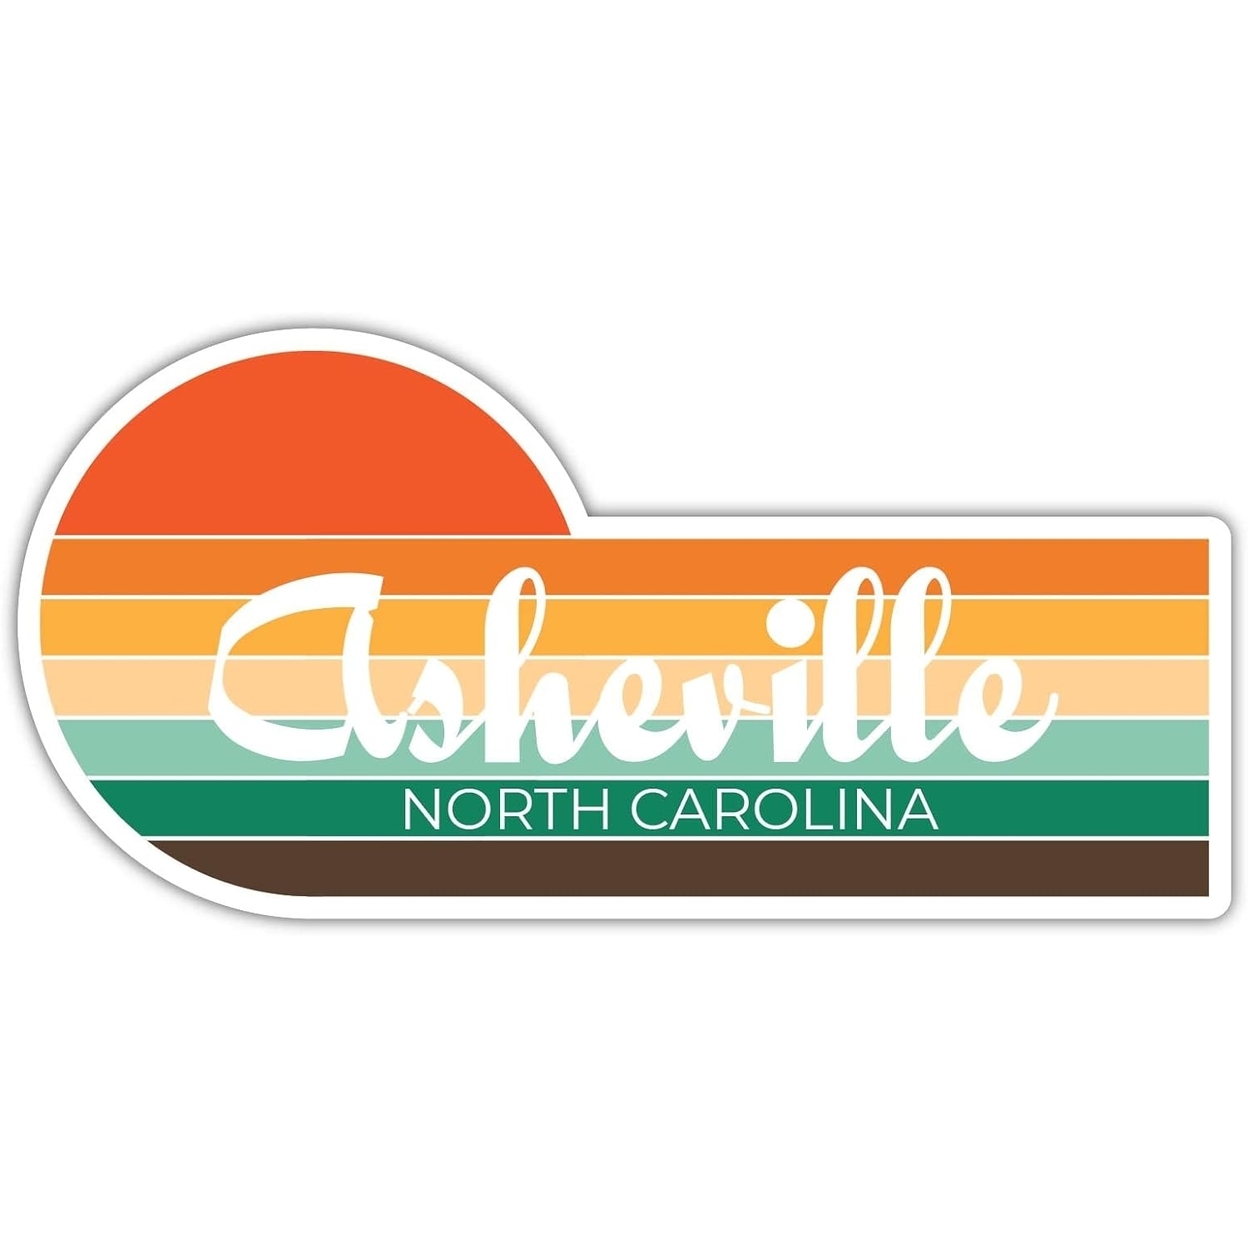 Asheville North Carolina Sticker Retro Vintage Sunset City 70s Aesthetic Design - 4 Inch